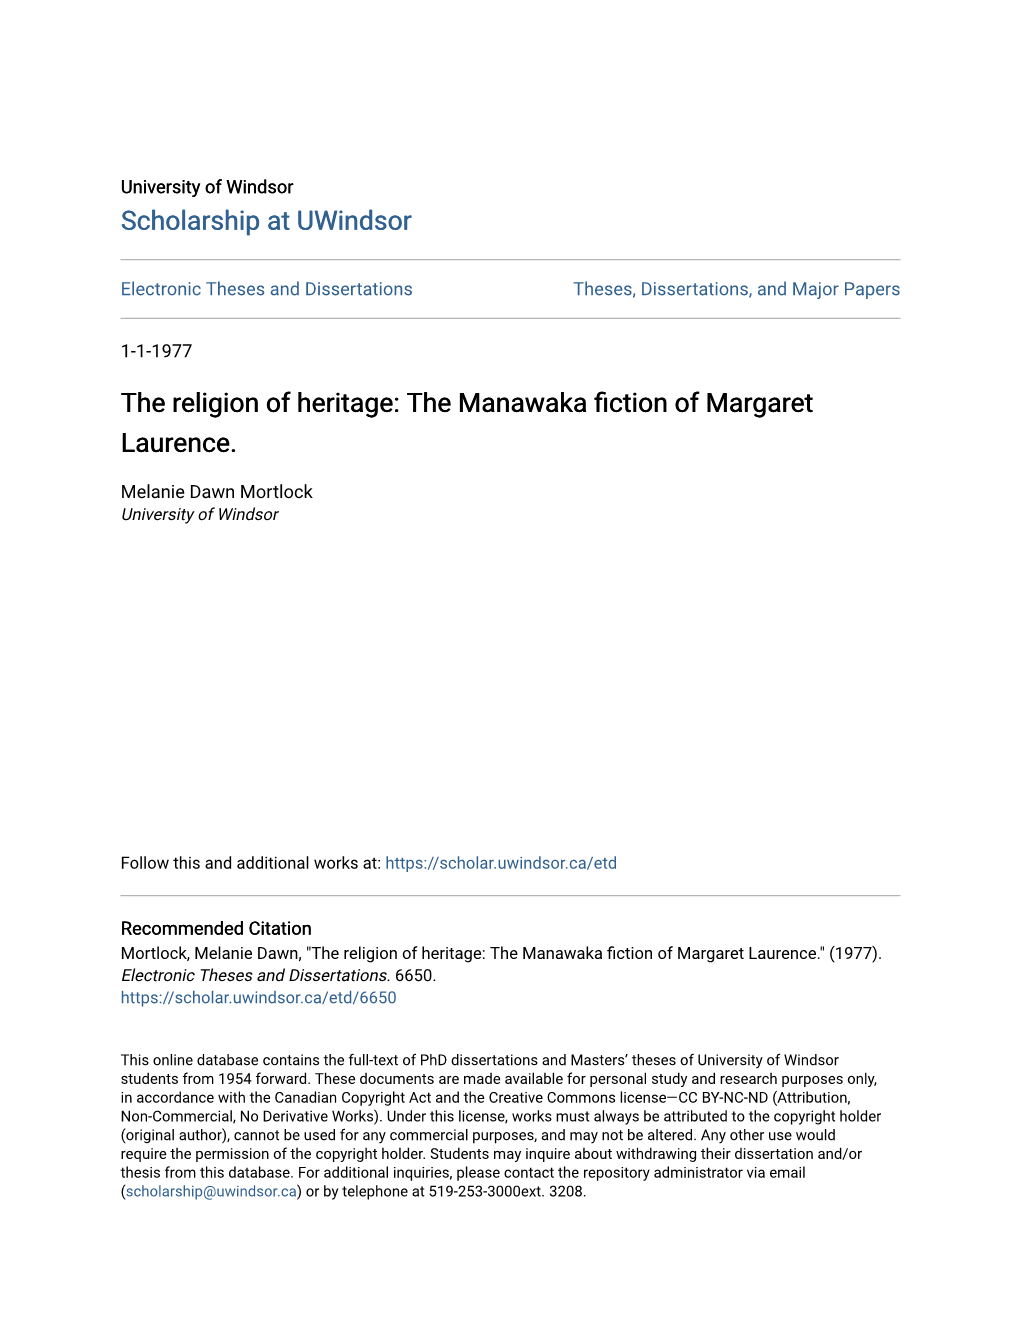 The Manawaka Fiction of Margaret Laurence